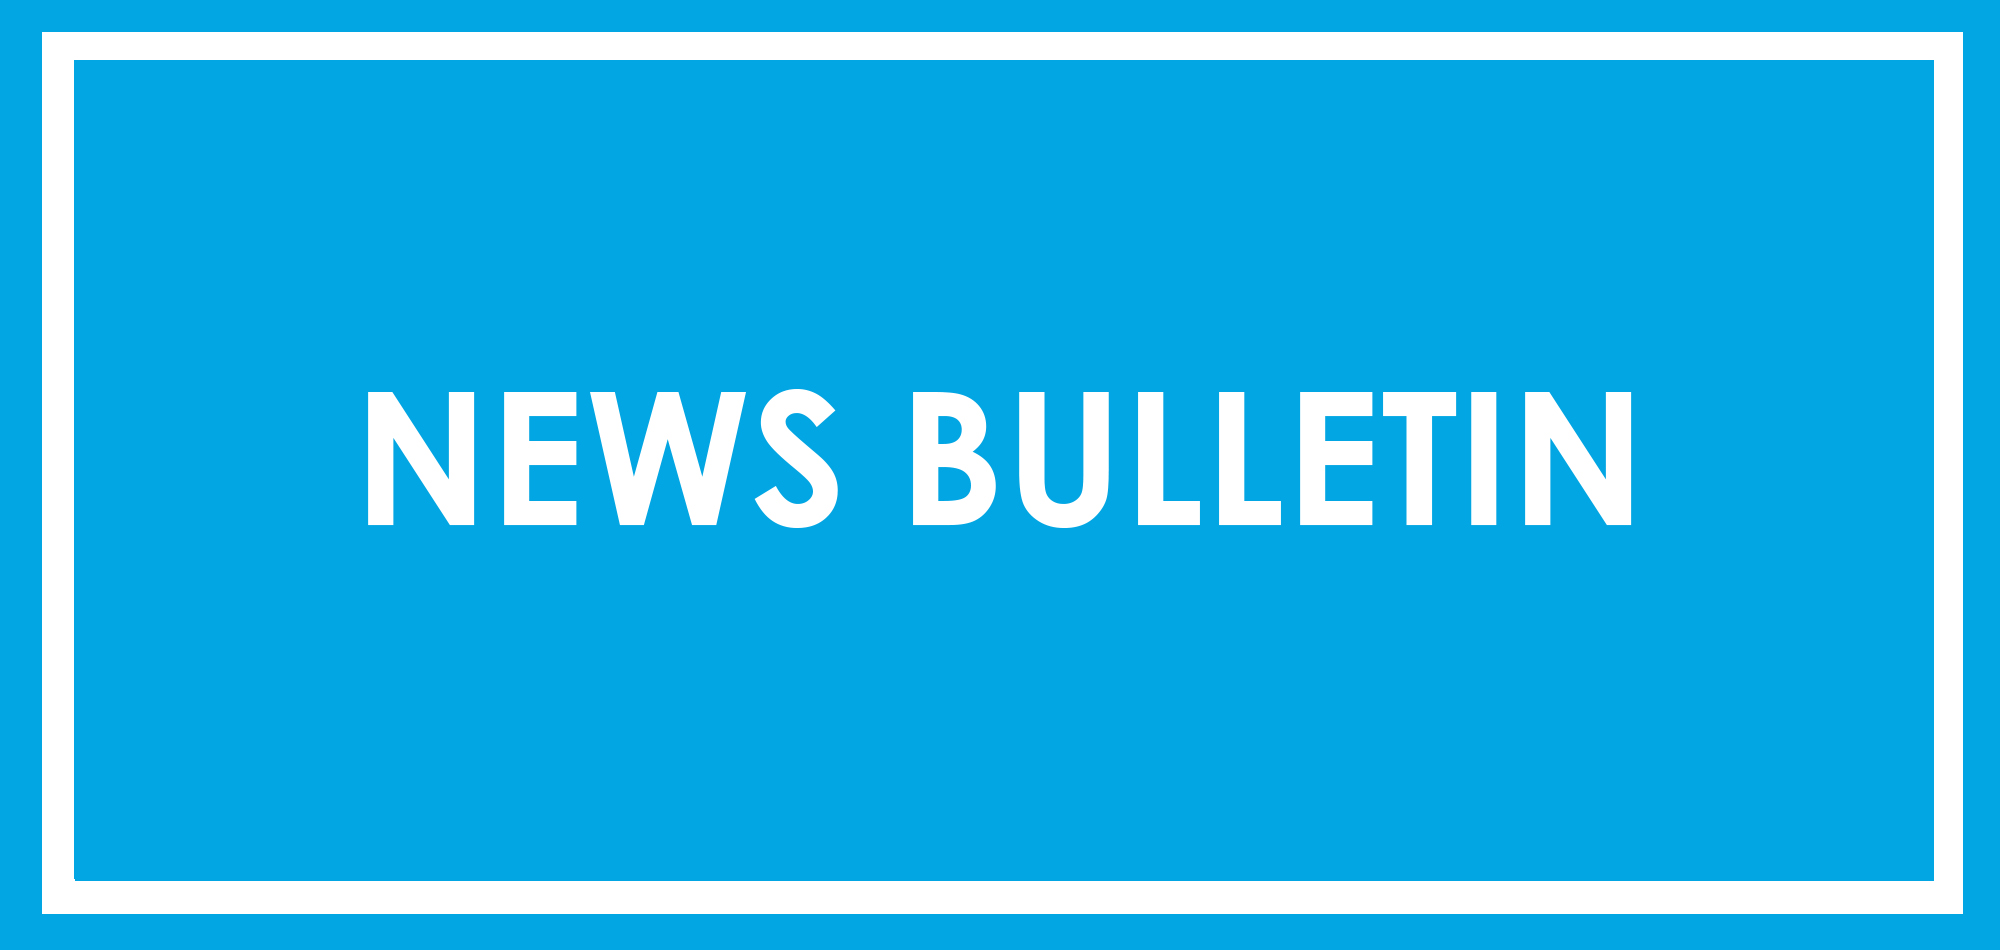 News Bulletin - 14.11.21